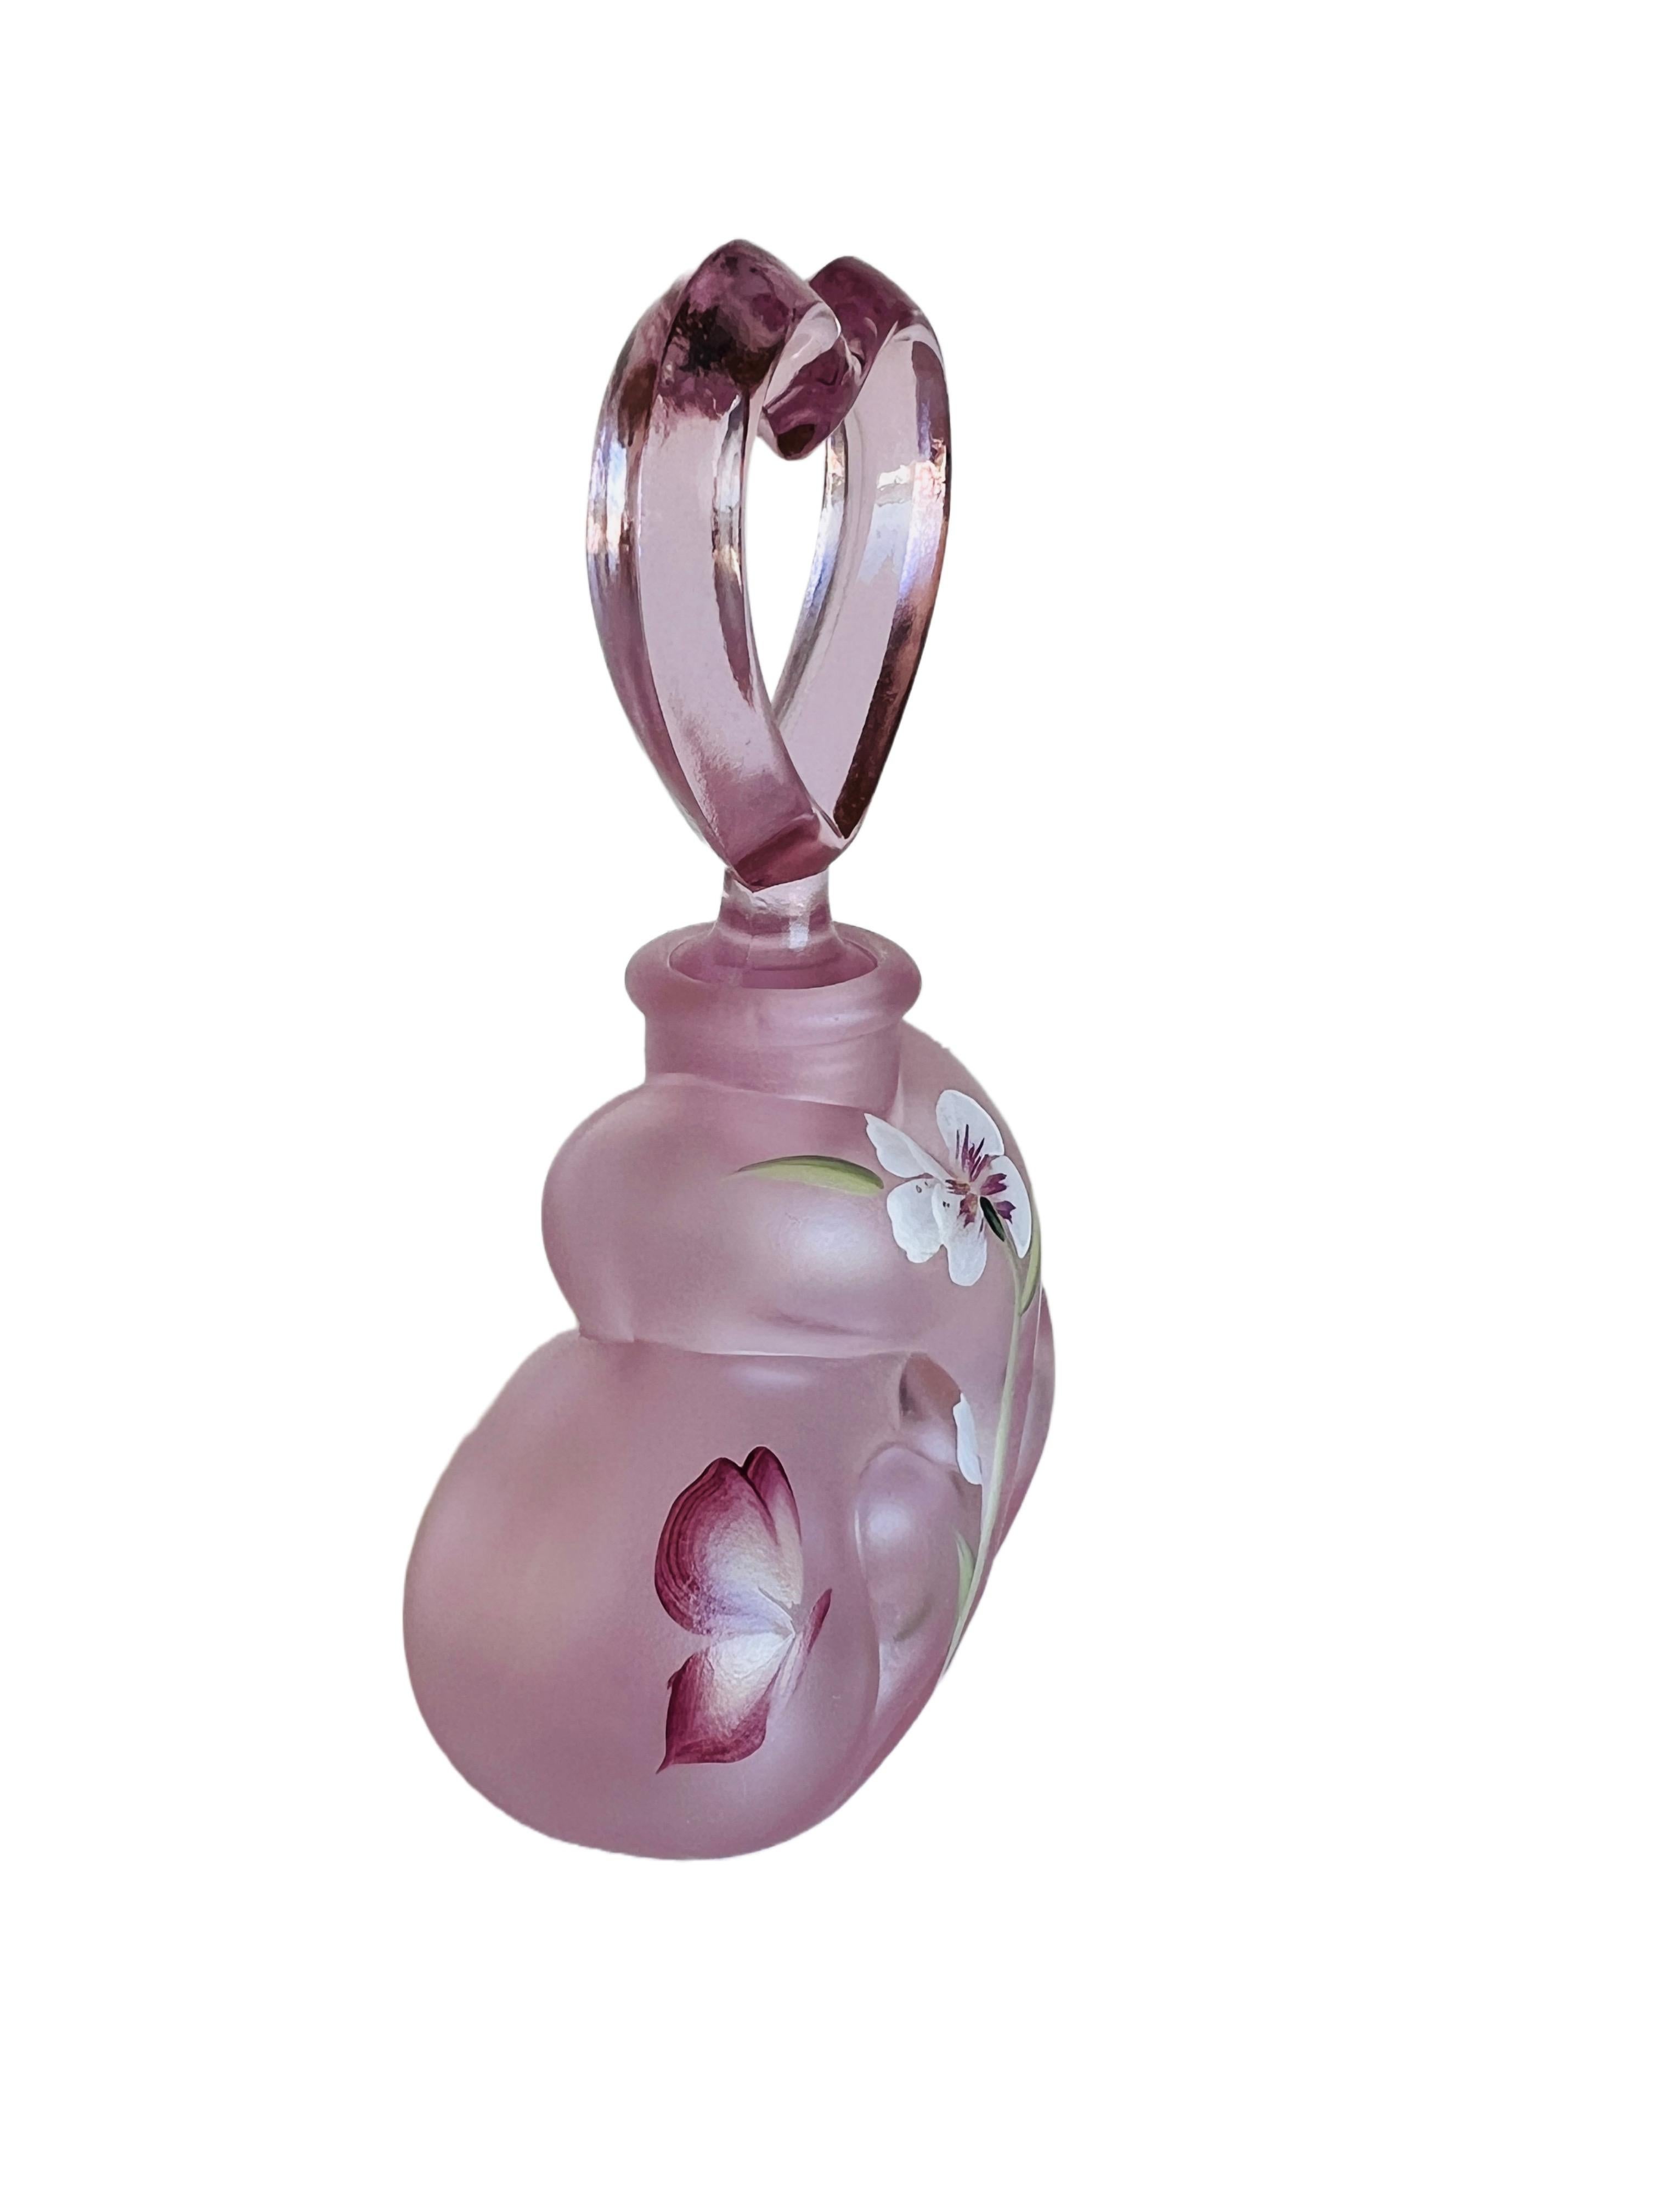 Artisan Vintage Fenton Signed Hand Painted Pink Heart Flower Art Glass Perfume Bottle  For Sale